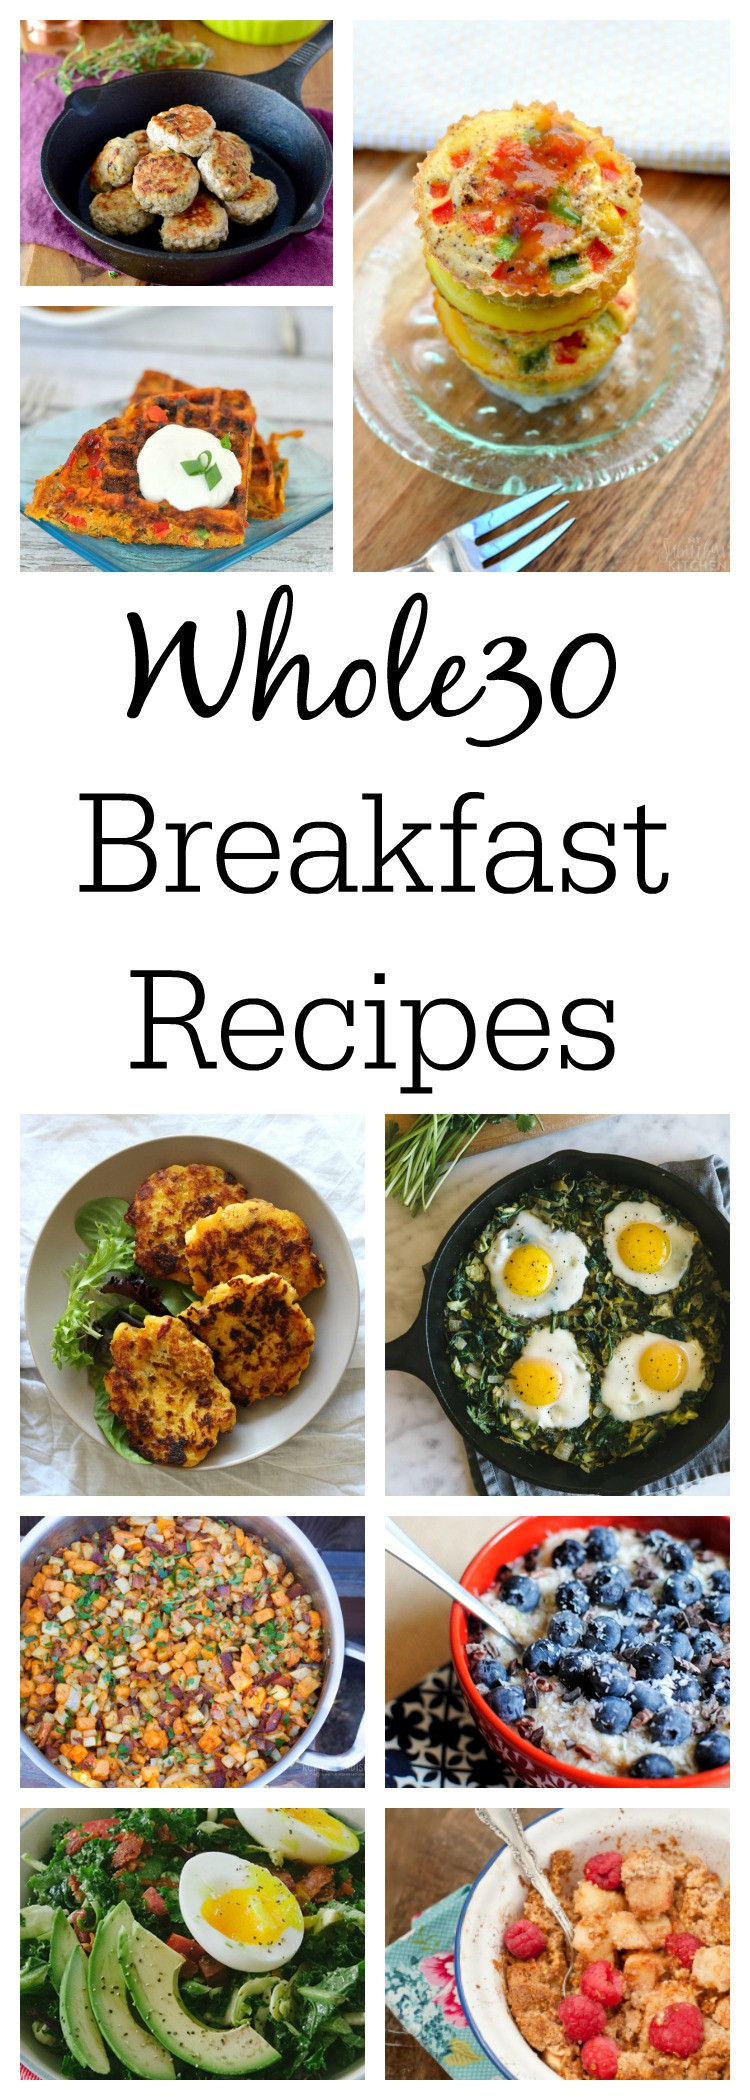 Whole30 Brunch Recipes
 15 Whole30 Breakfast Recipes My Suburban Kitchen